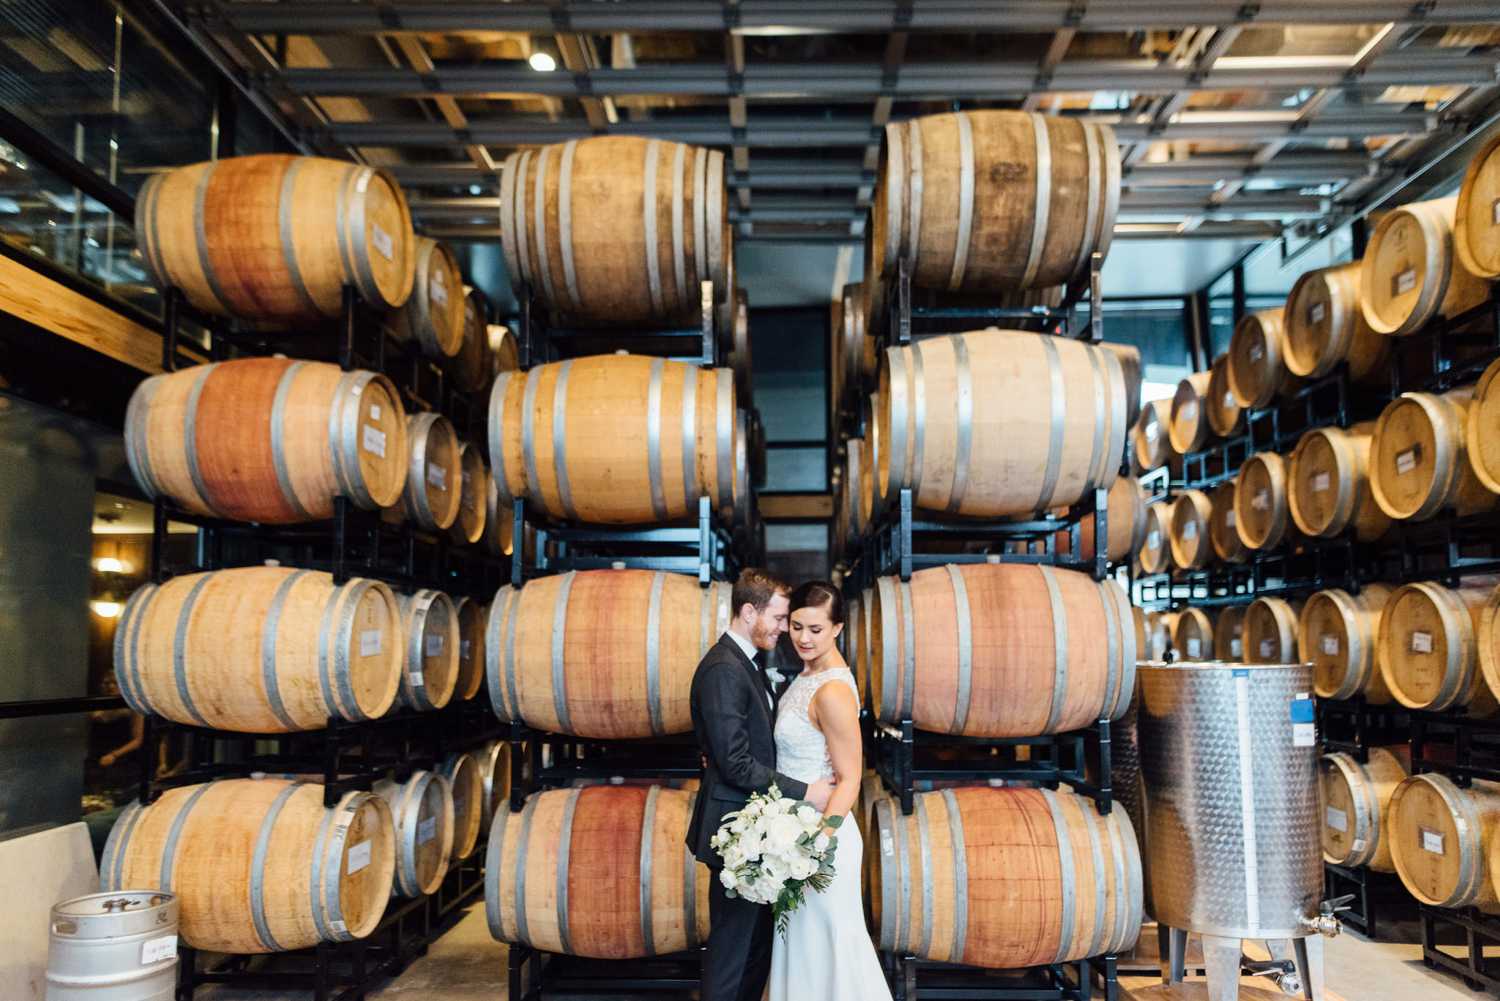 Sandy + Geoff - District Winery Wedding - Washington DC Wedding Photographer - Alison Dunn Photography photo